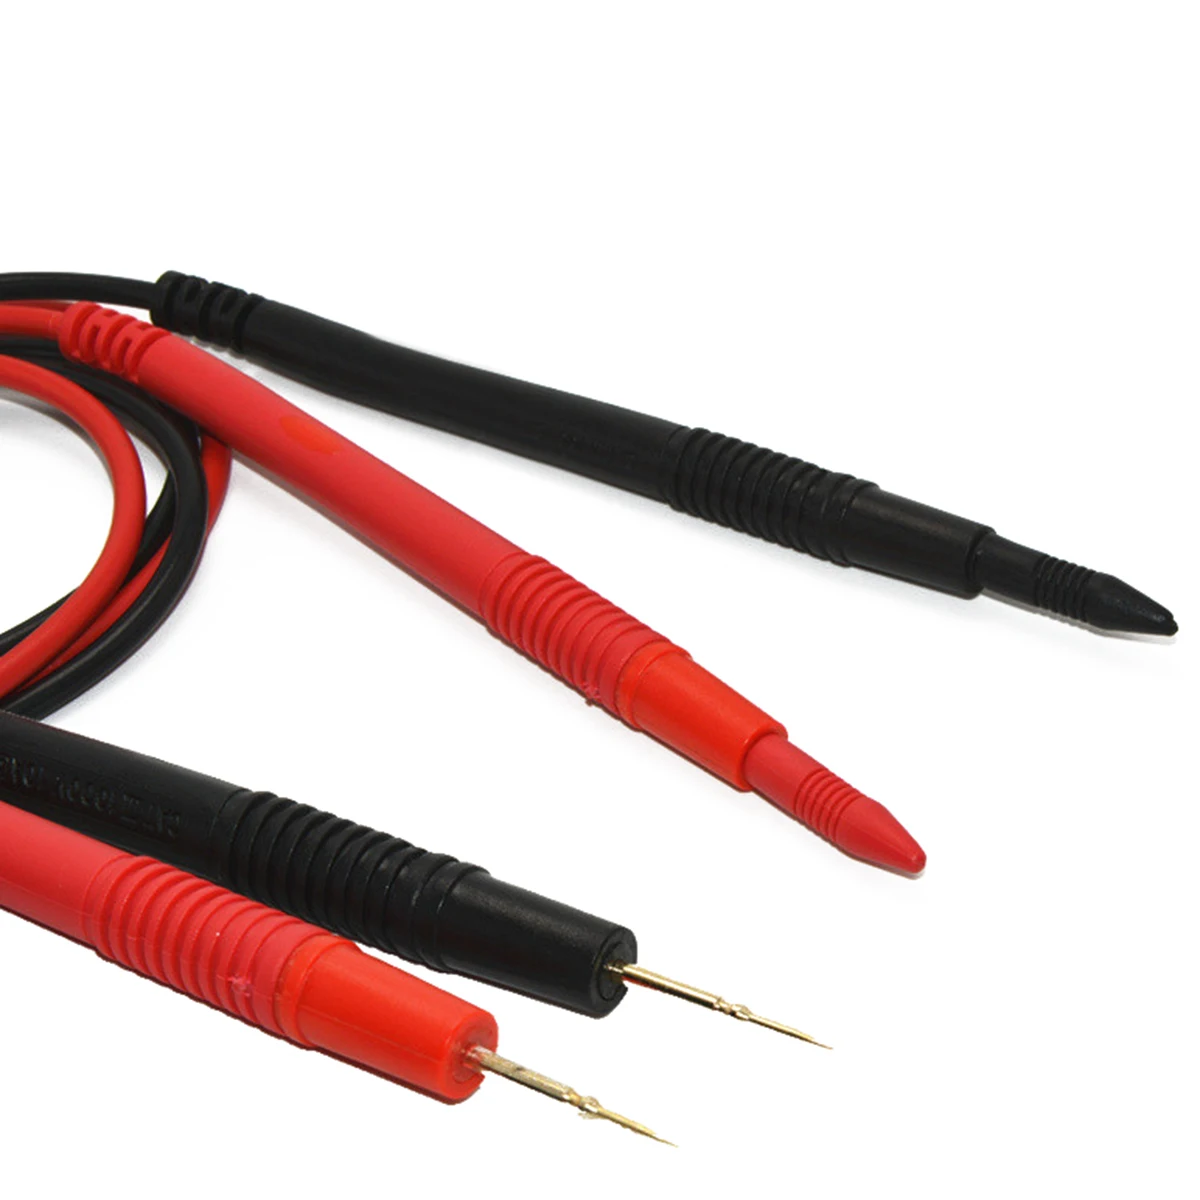 Multimeter Test  83 Digital Probes Volt Meter Cable Copper wire Tools hot 